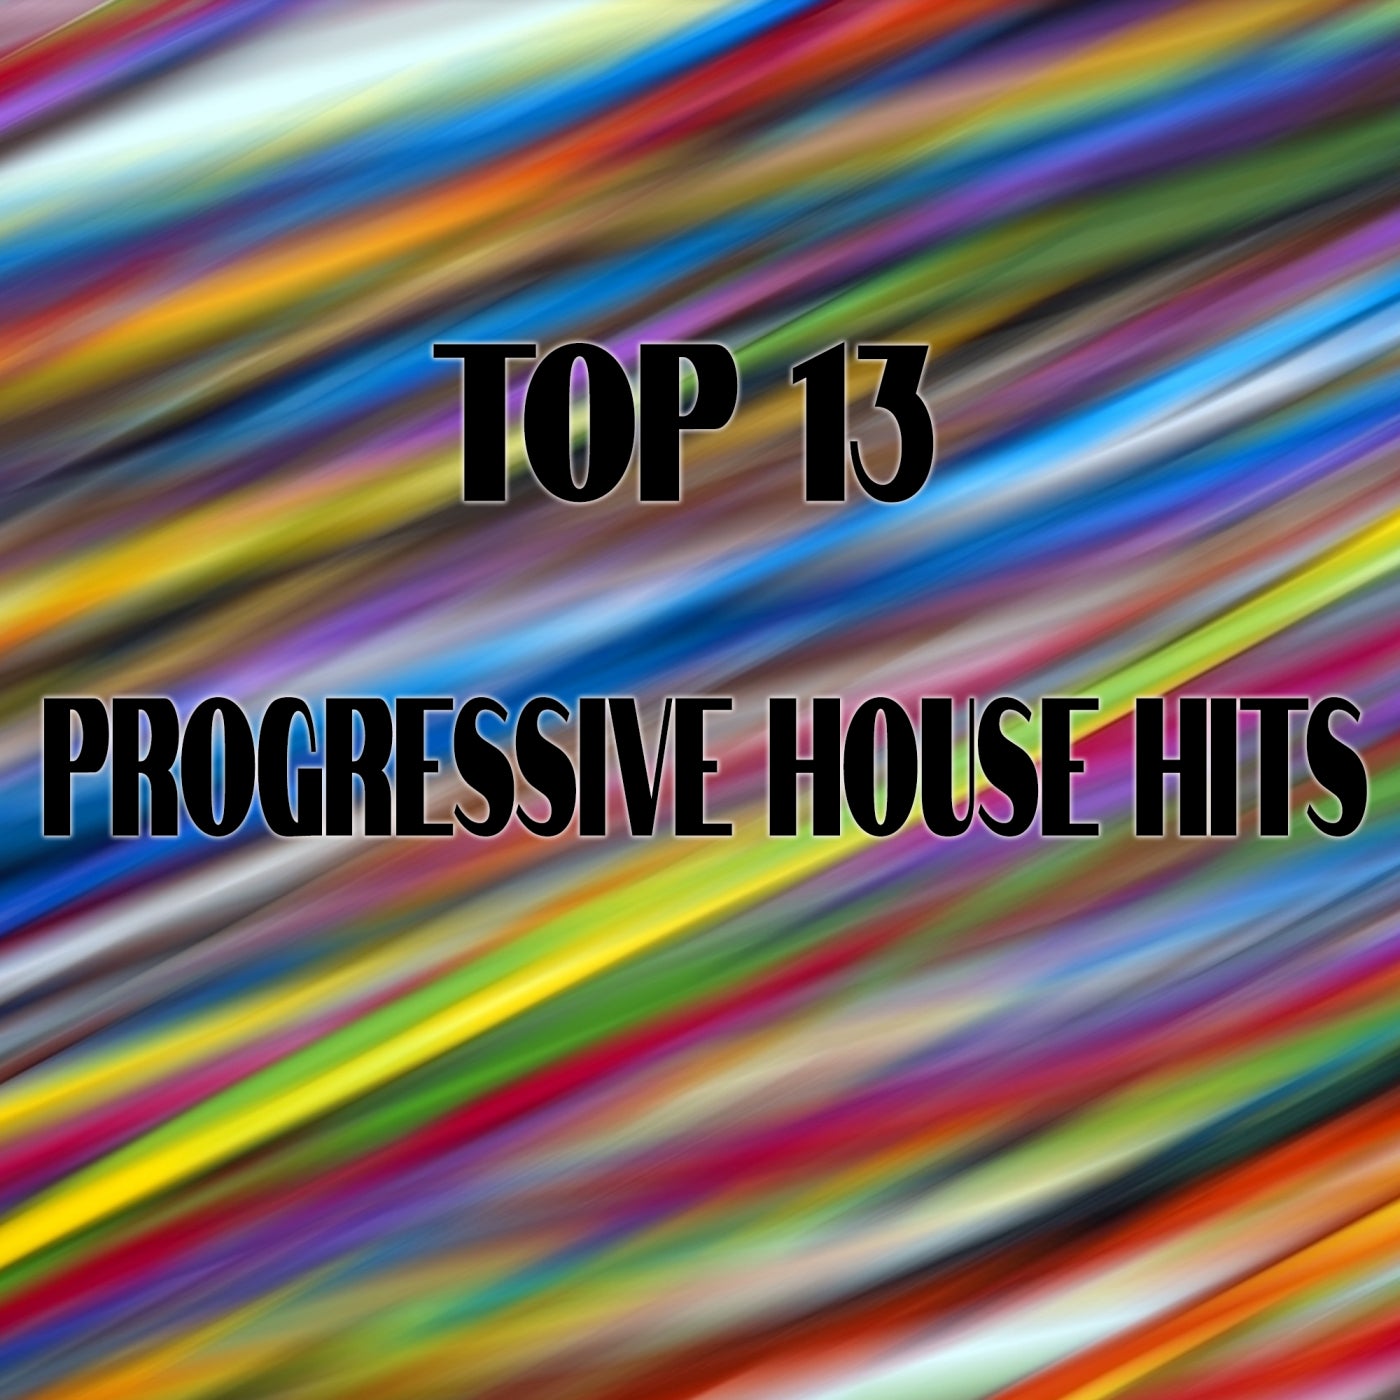 Top 13 Progressive House Hits